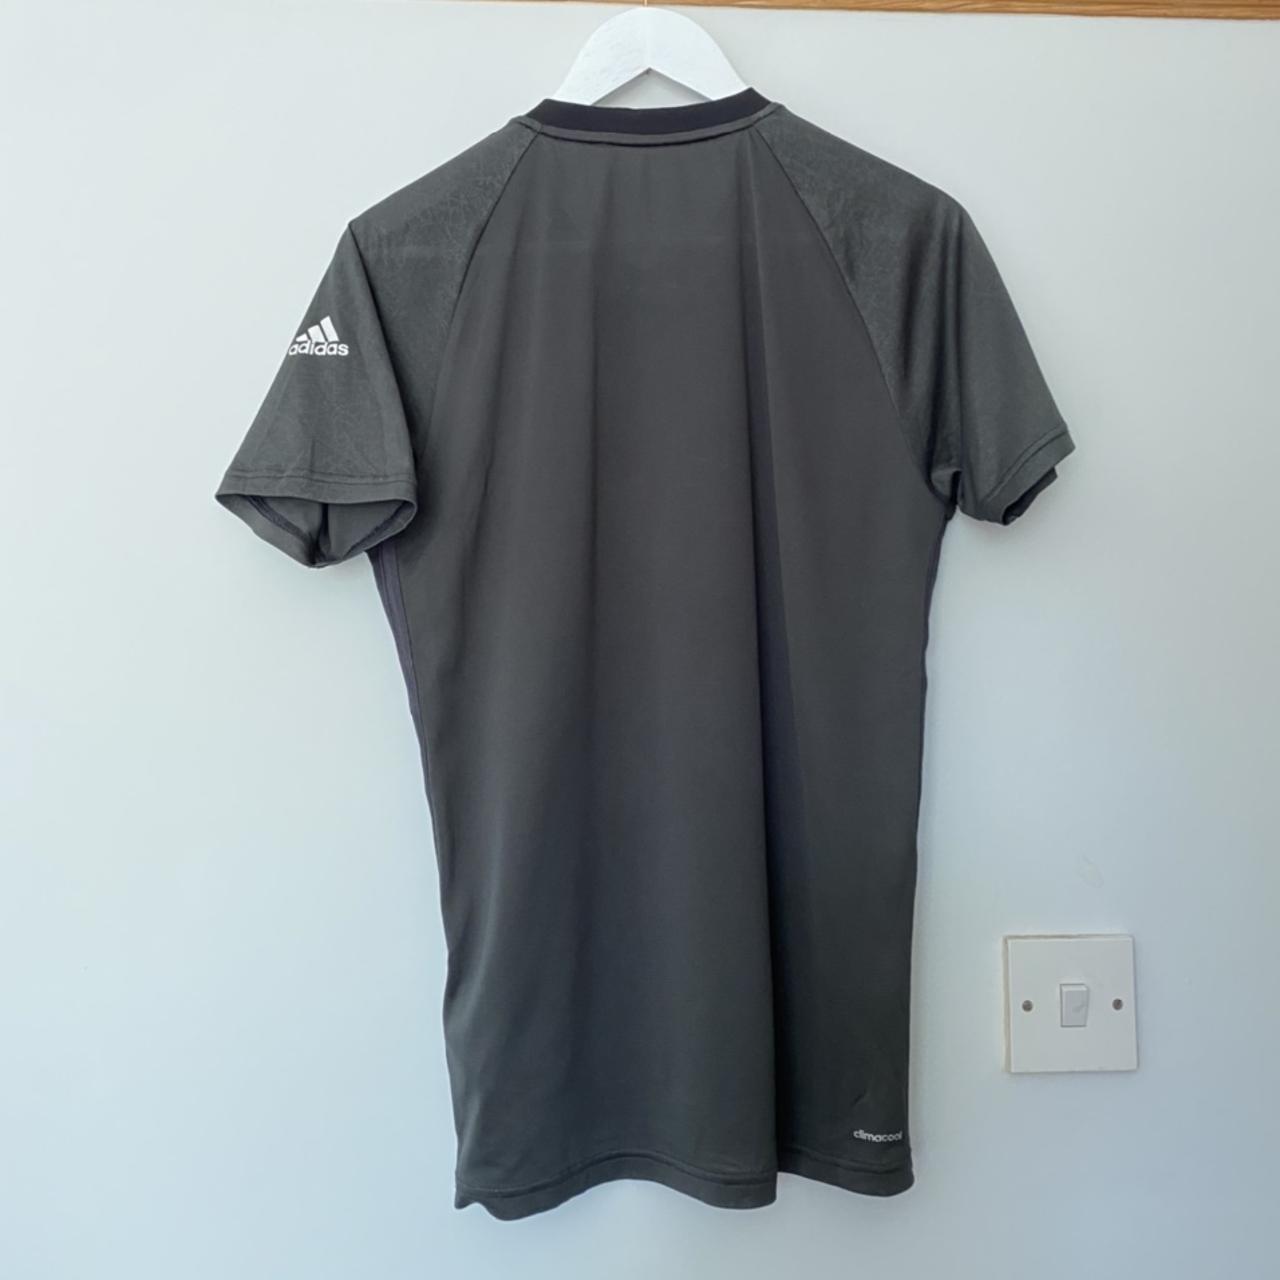 Adidas Men's Black and Grey T-shirt | Depop